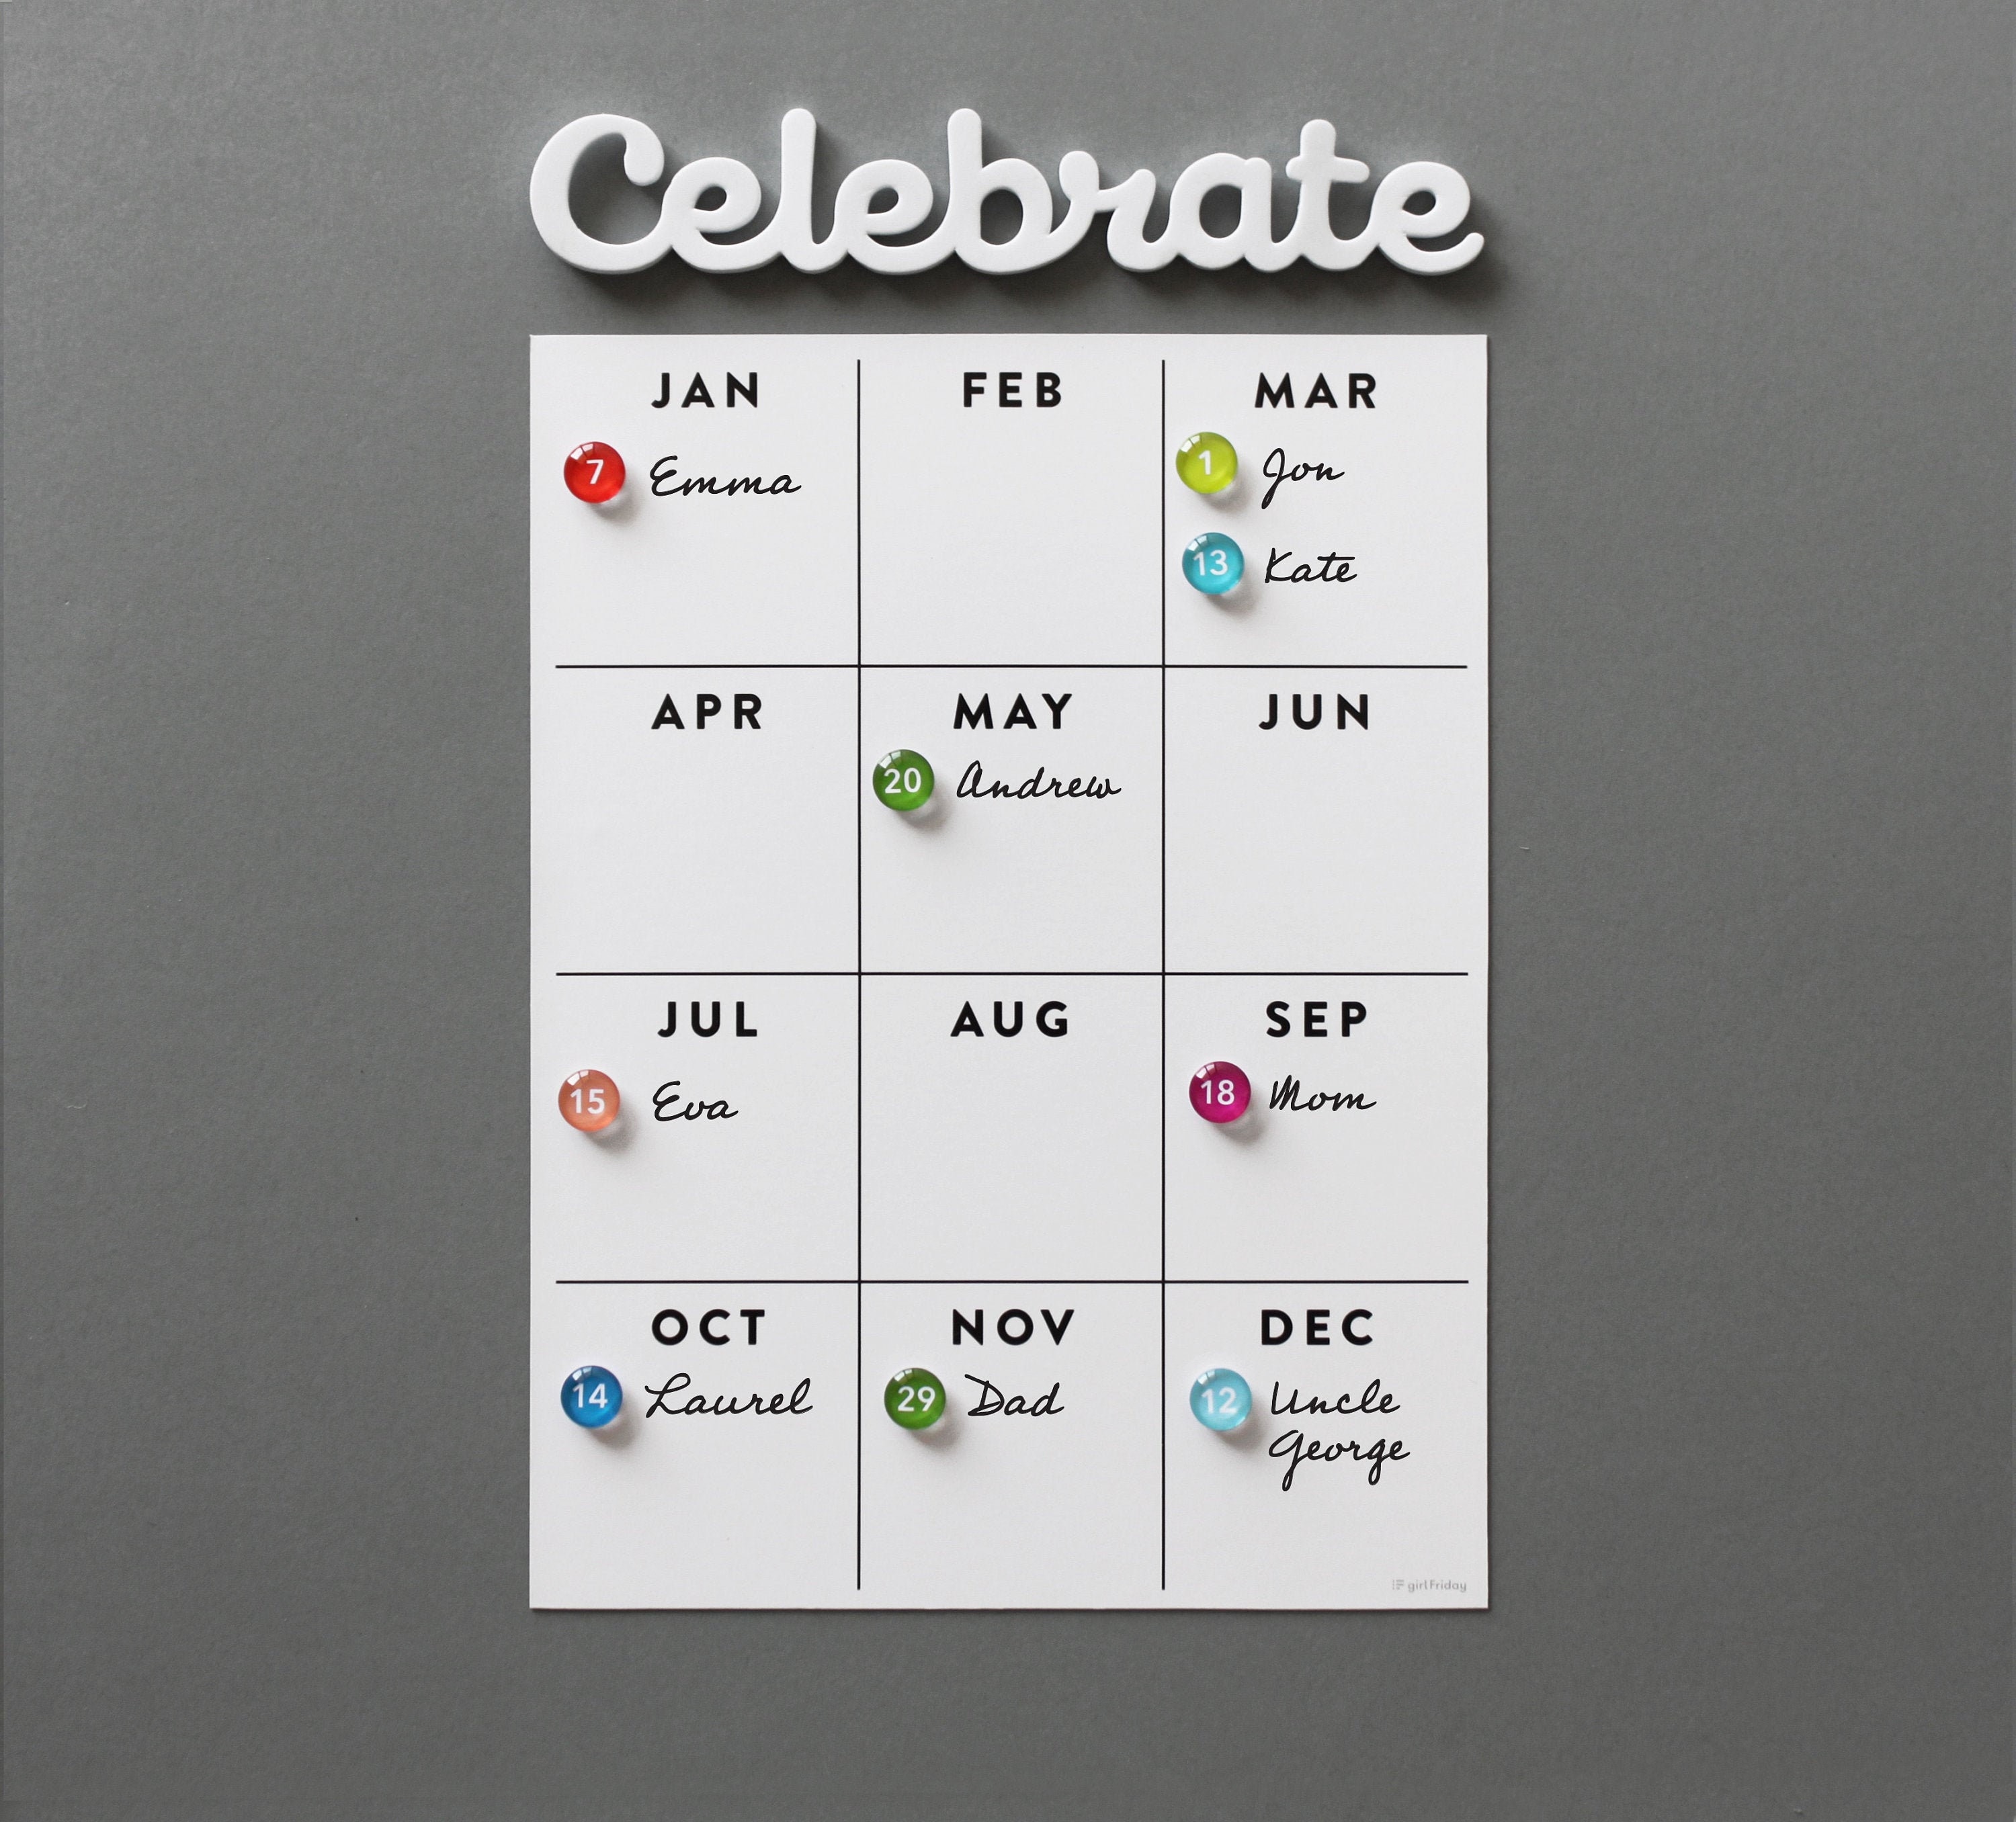 Chalkboard Calendar by TMWL